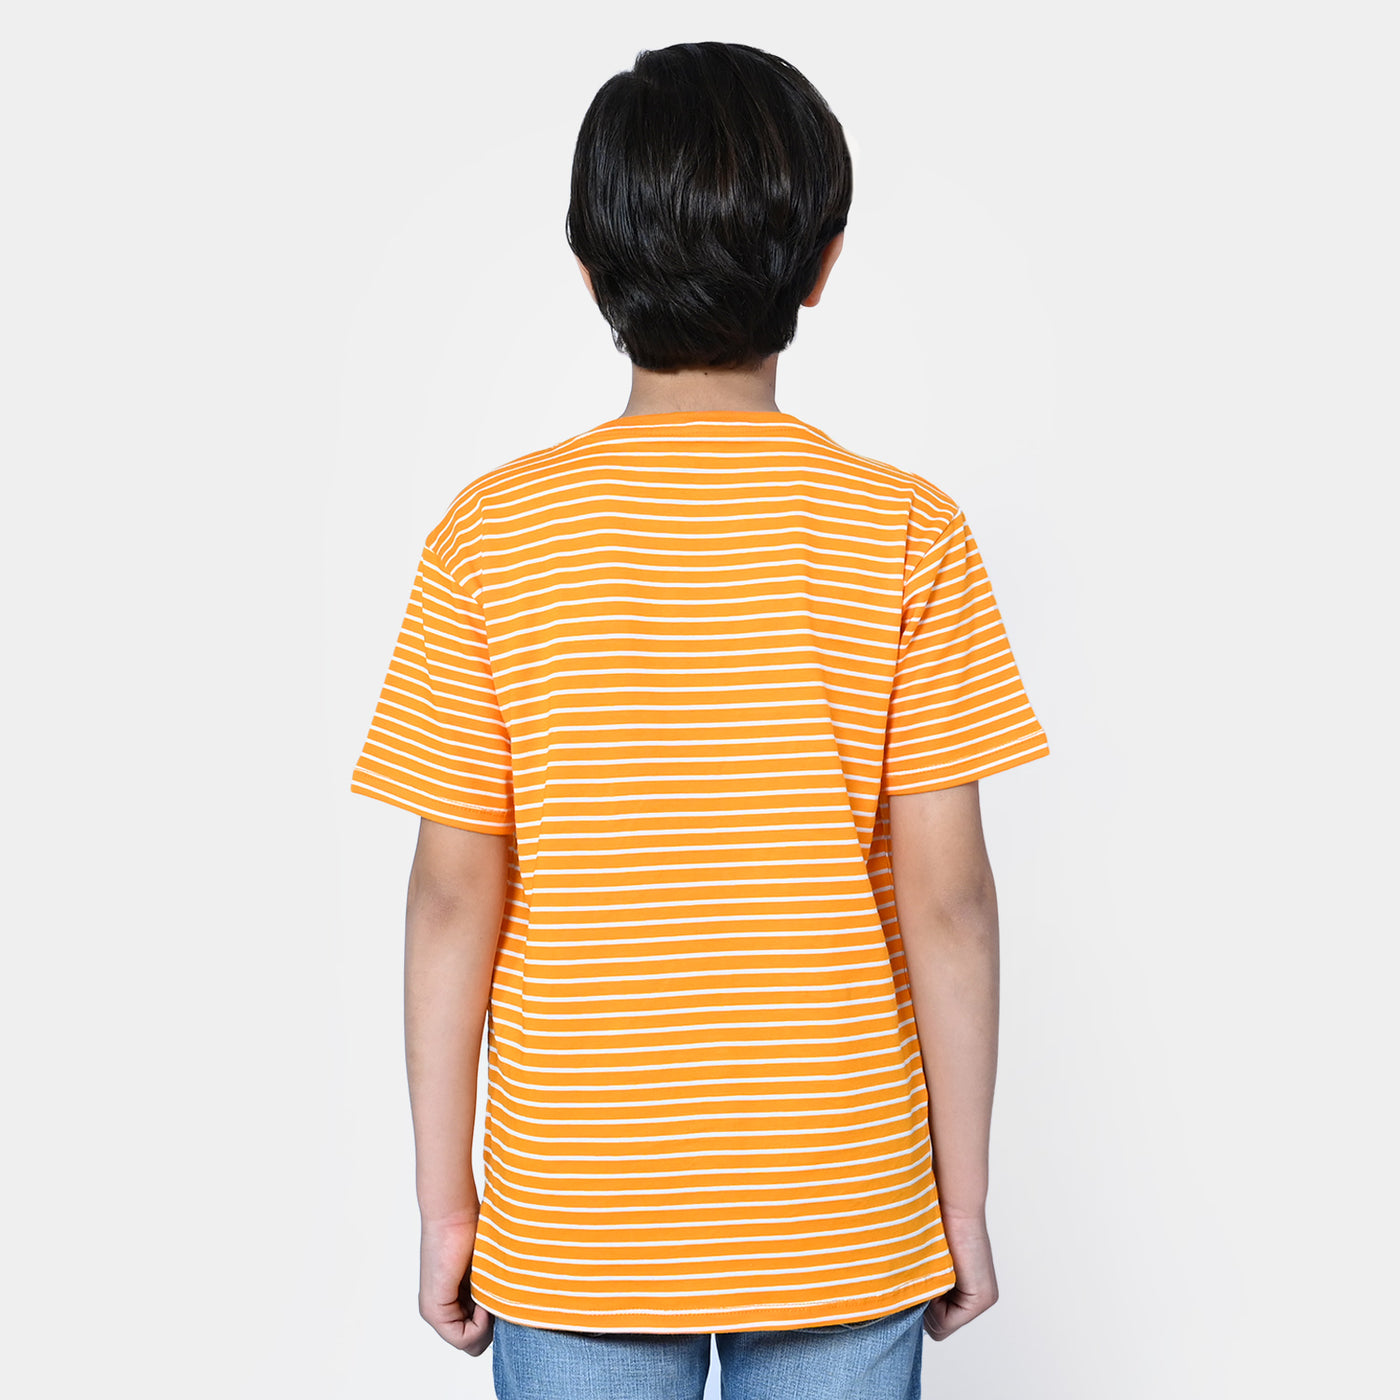 Boys Cotton T-Shirt Adventures - Orange